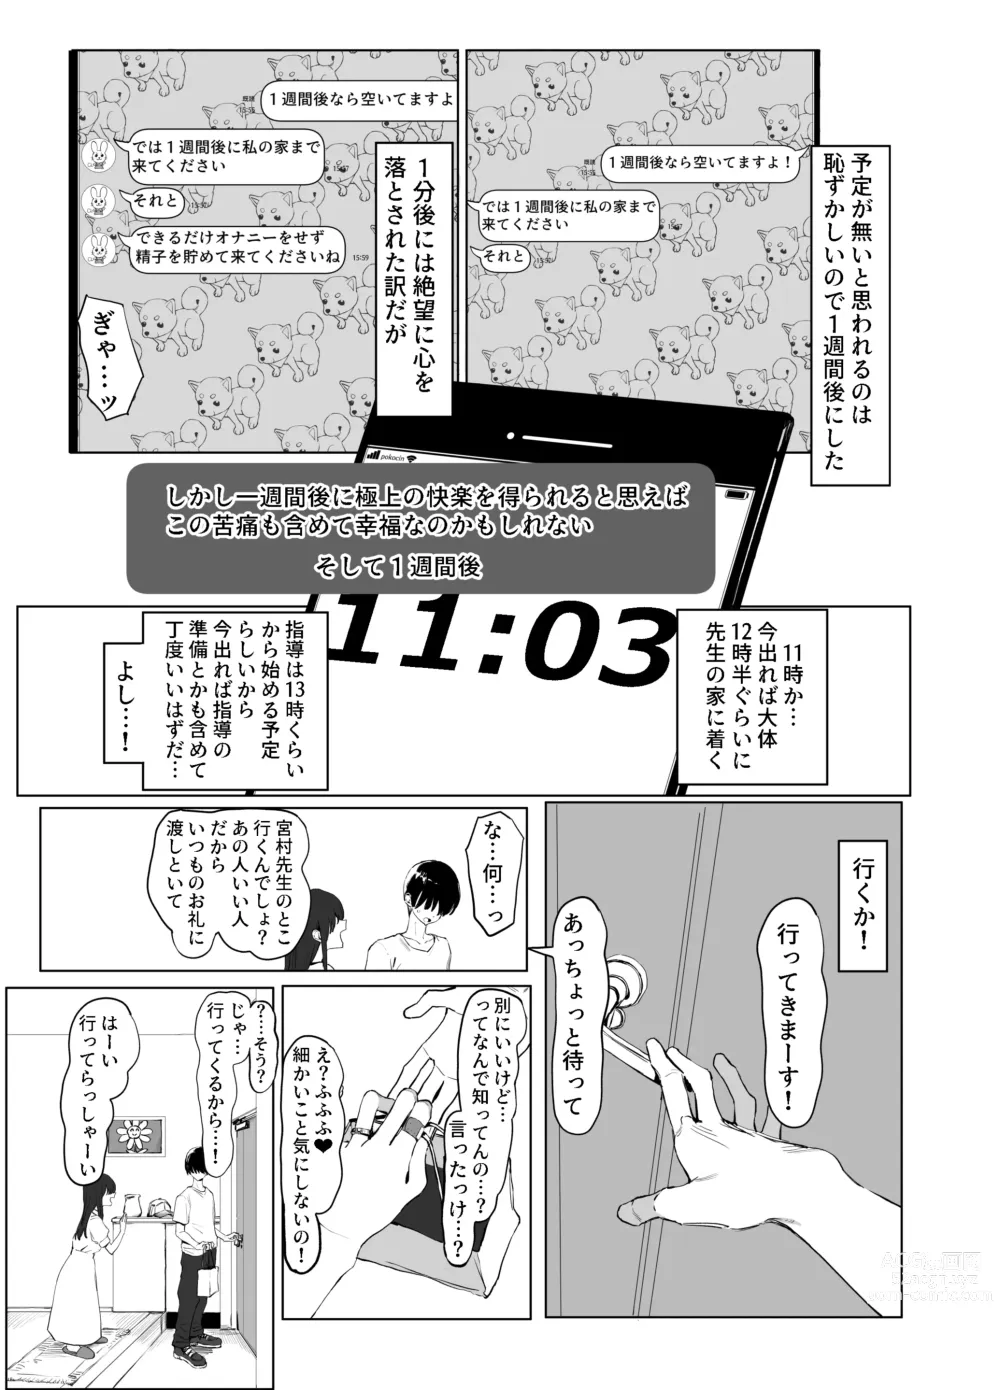 Page 5 of doujinshi Seikoui Jisshuu 2